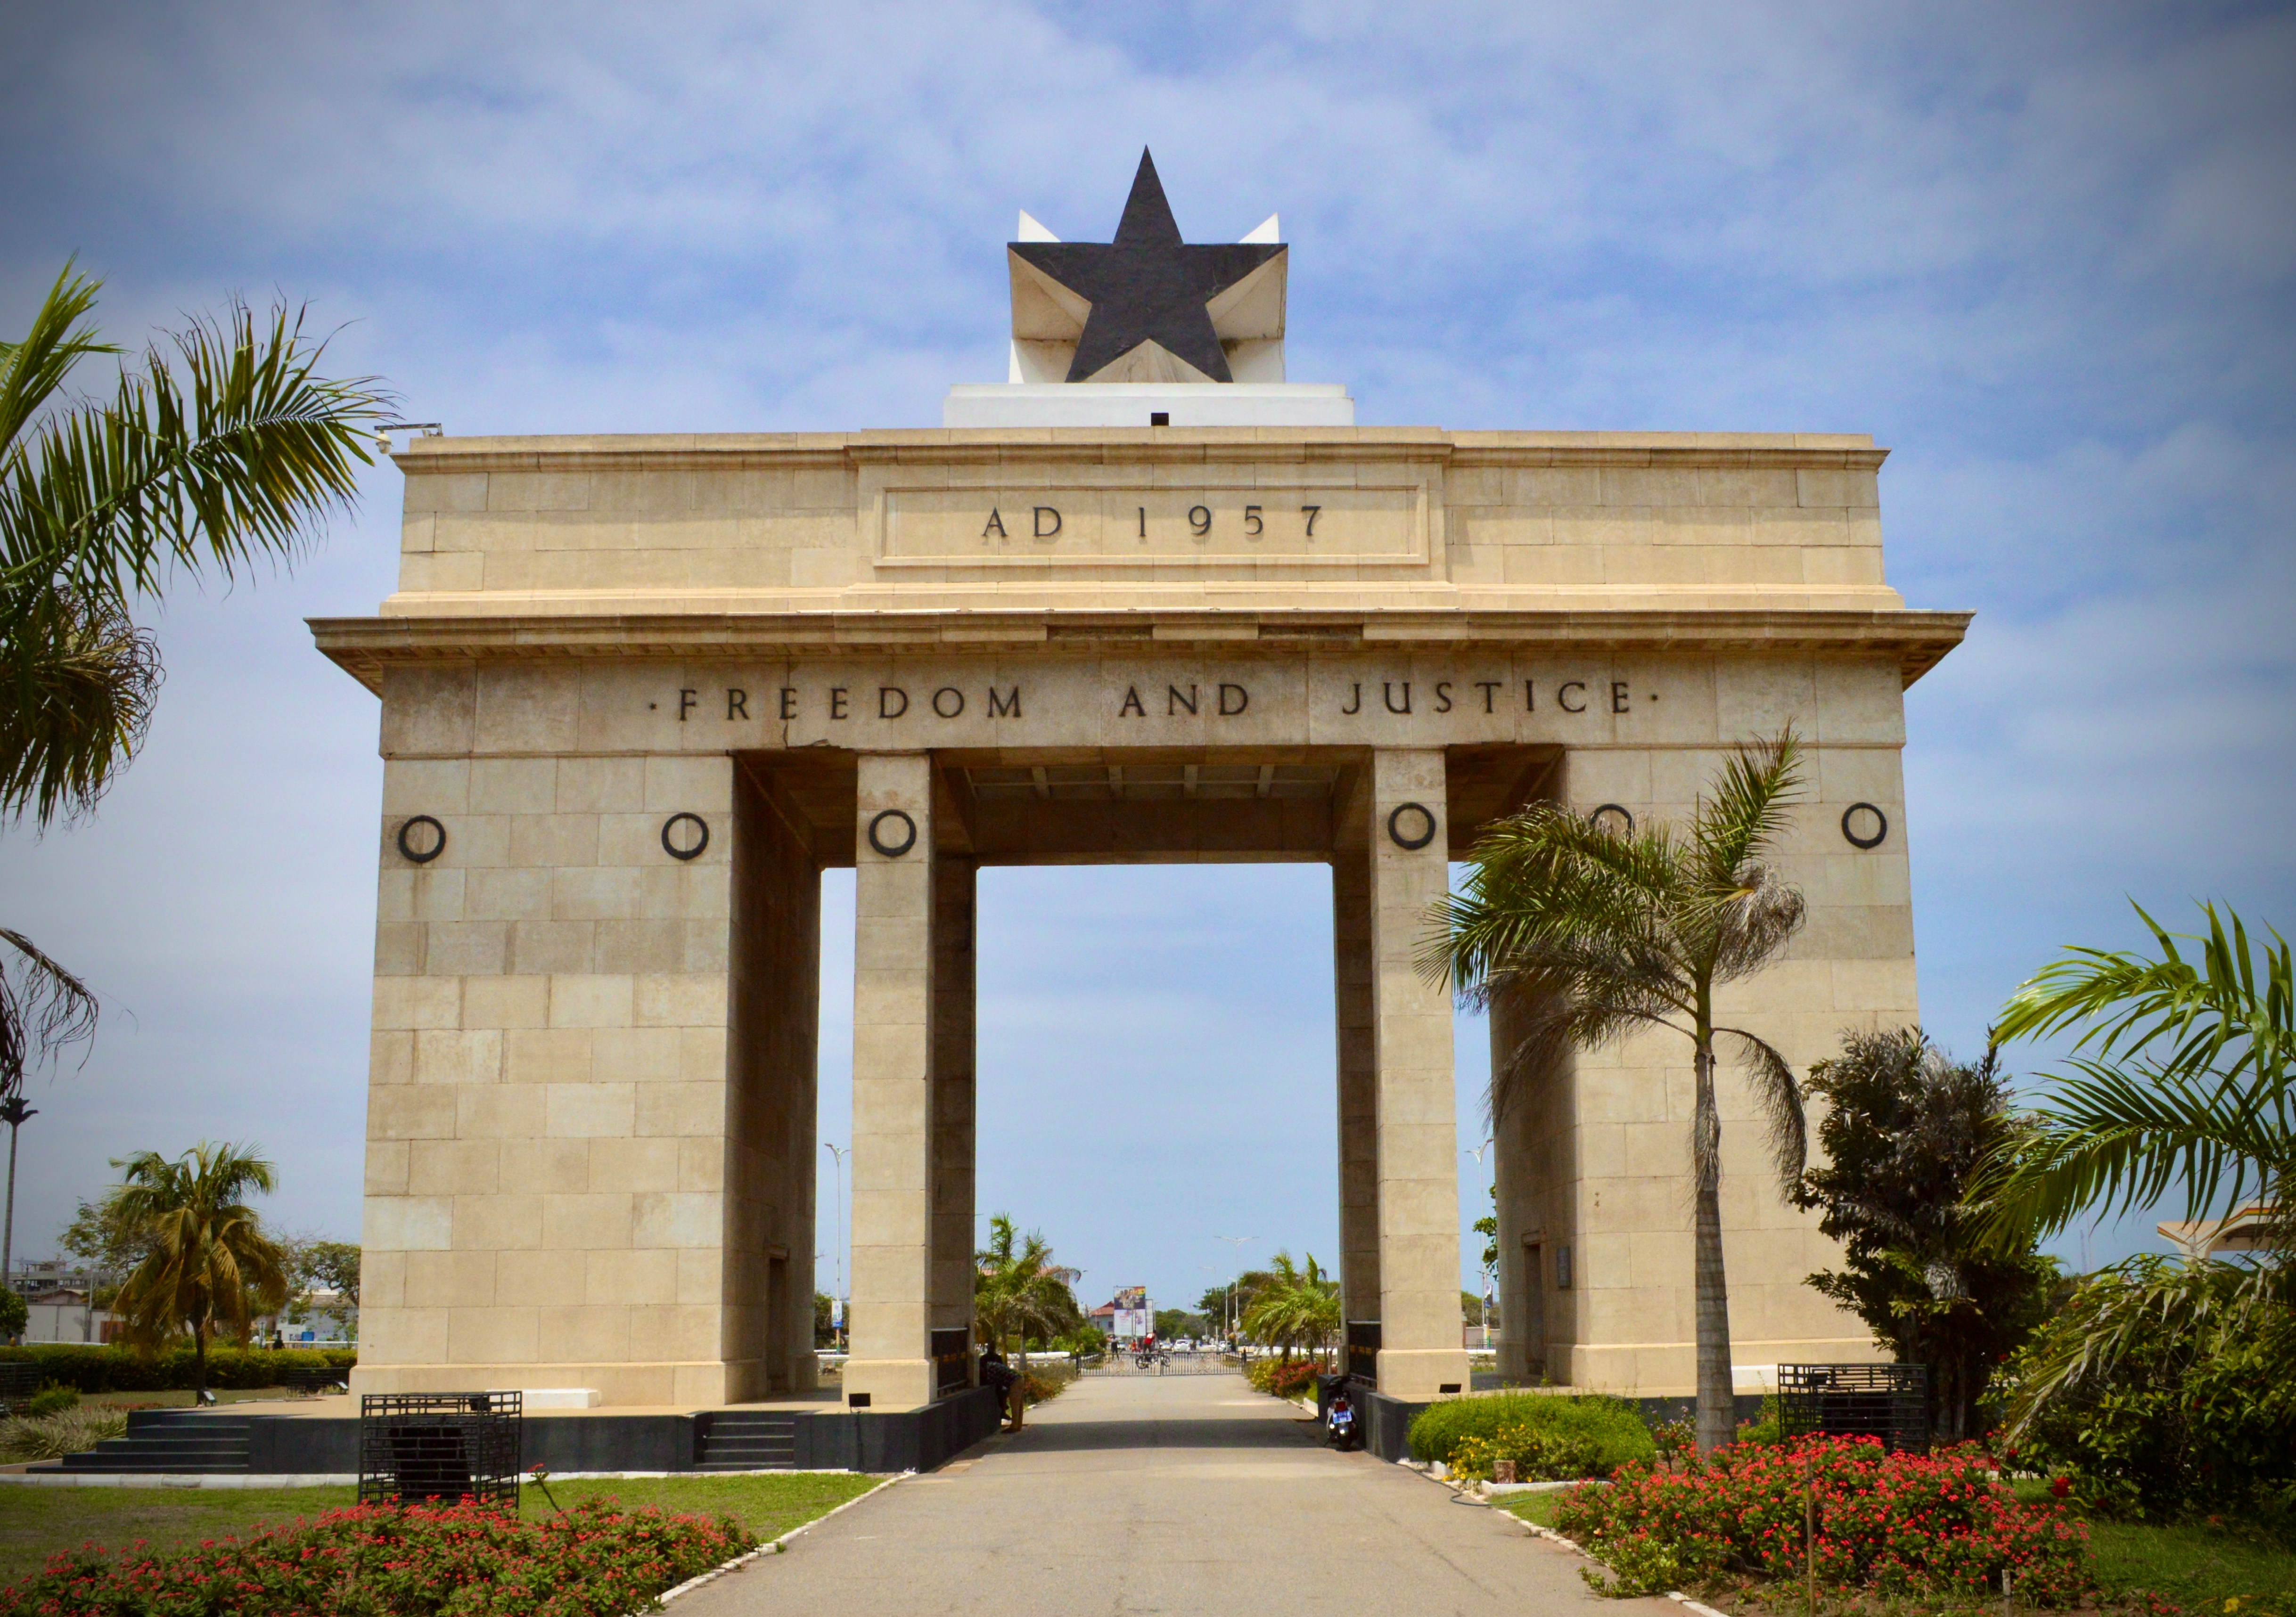 The Black Star Gate in Accra, Ghana